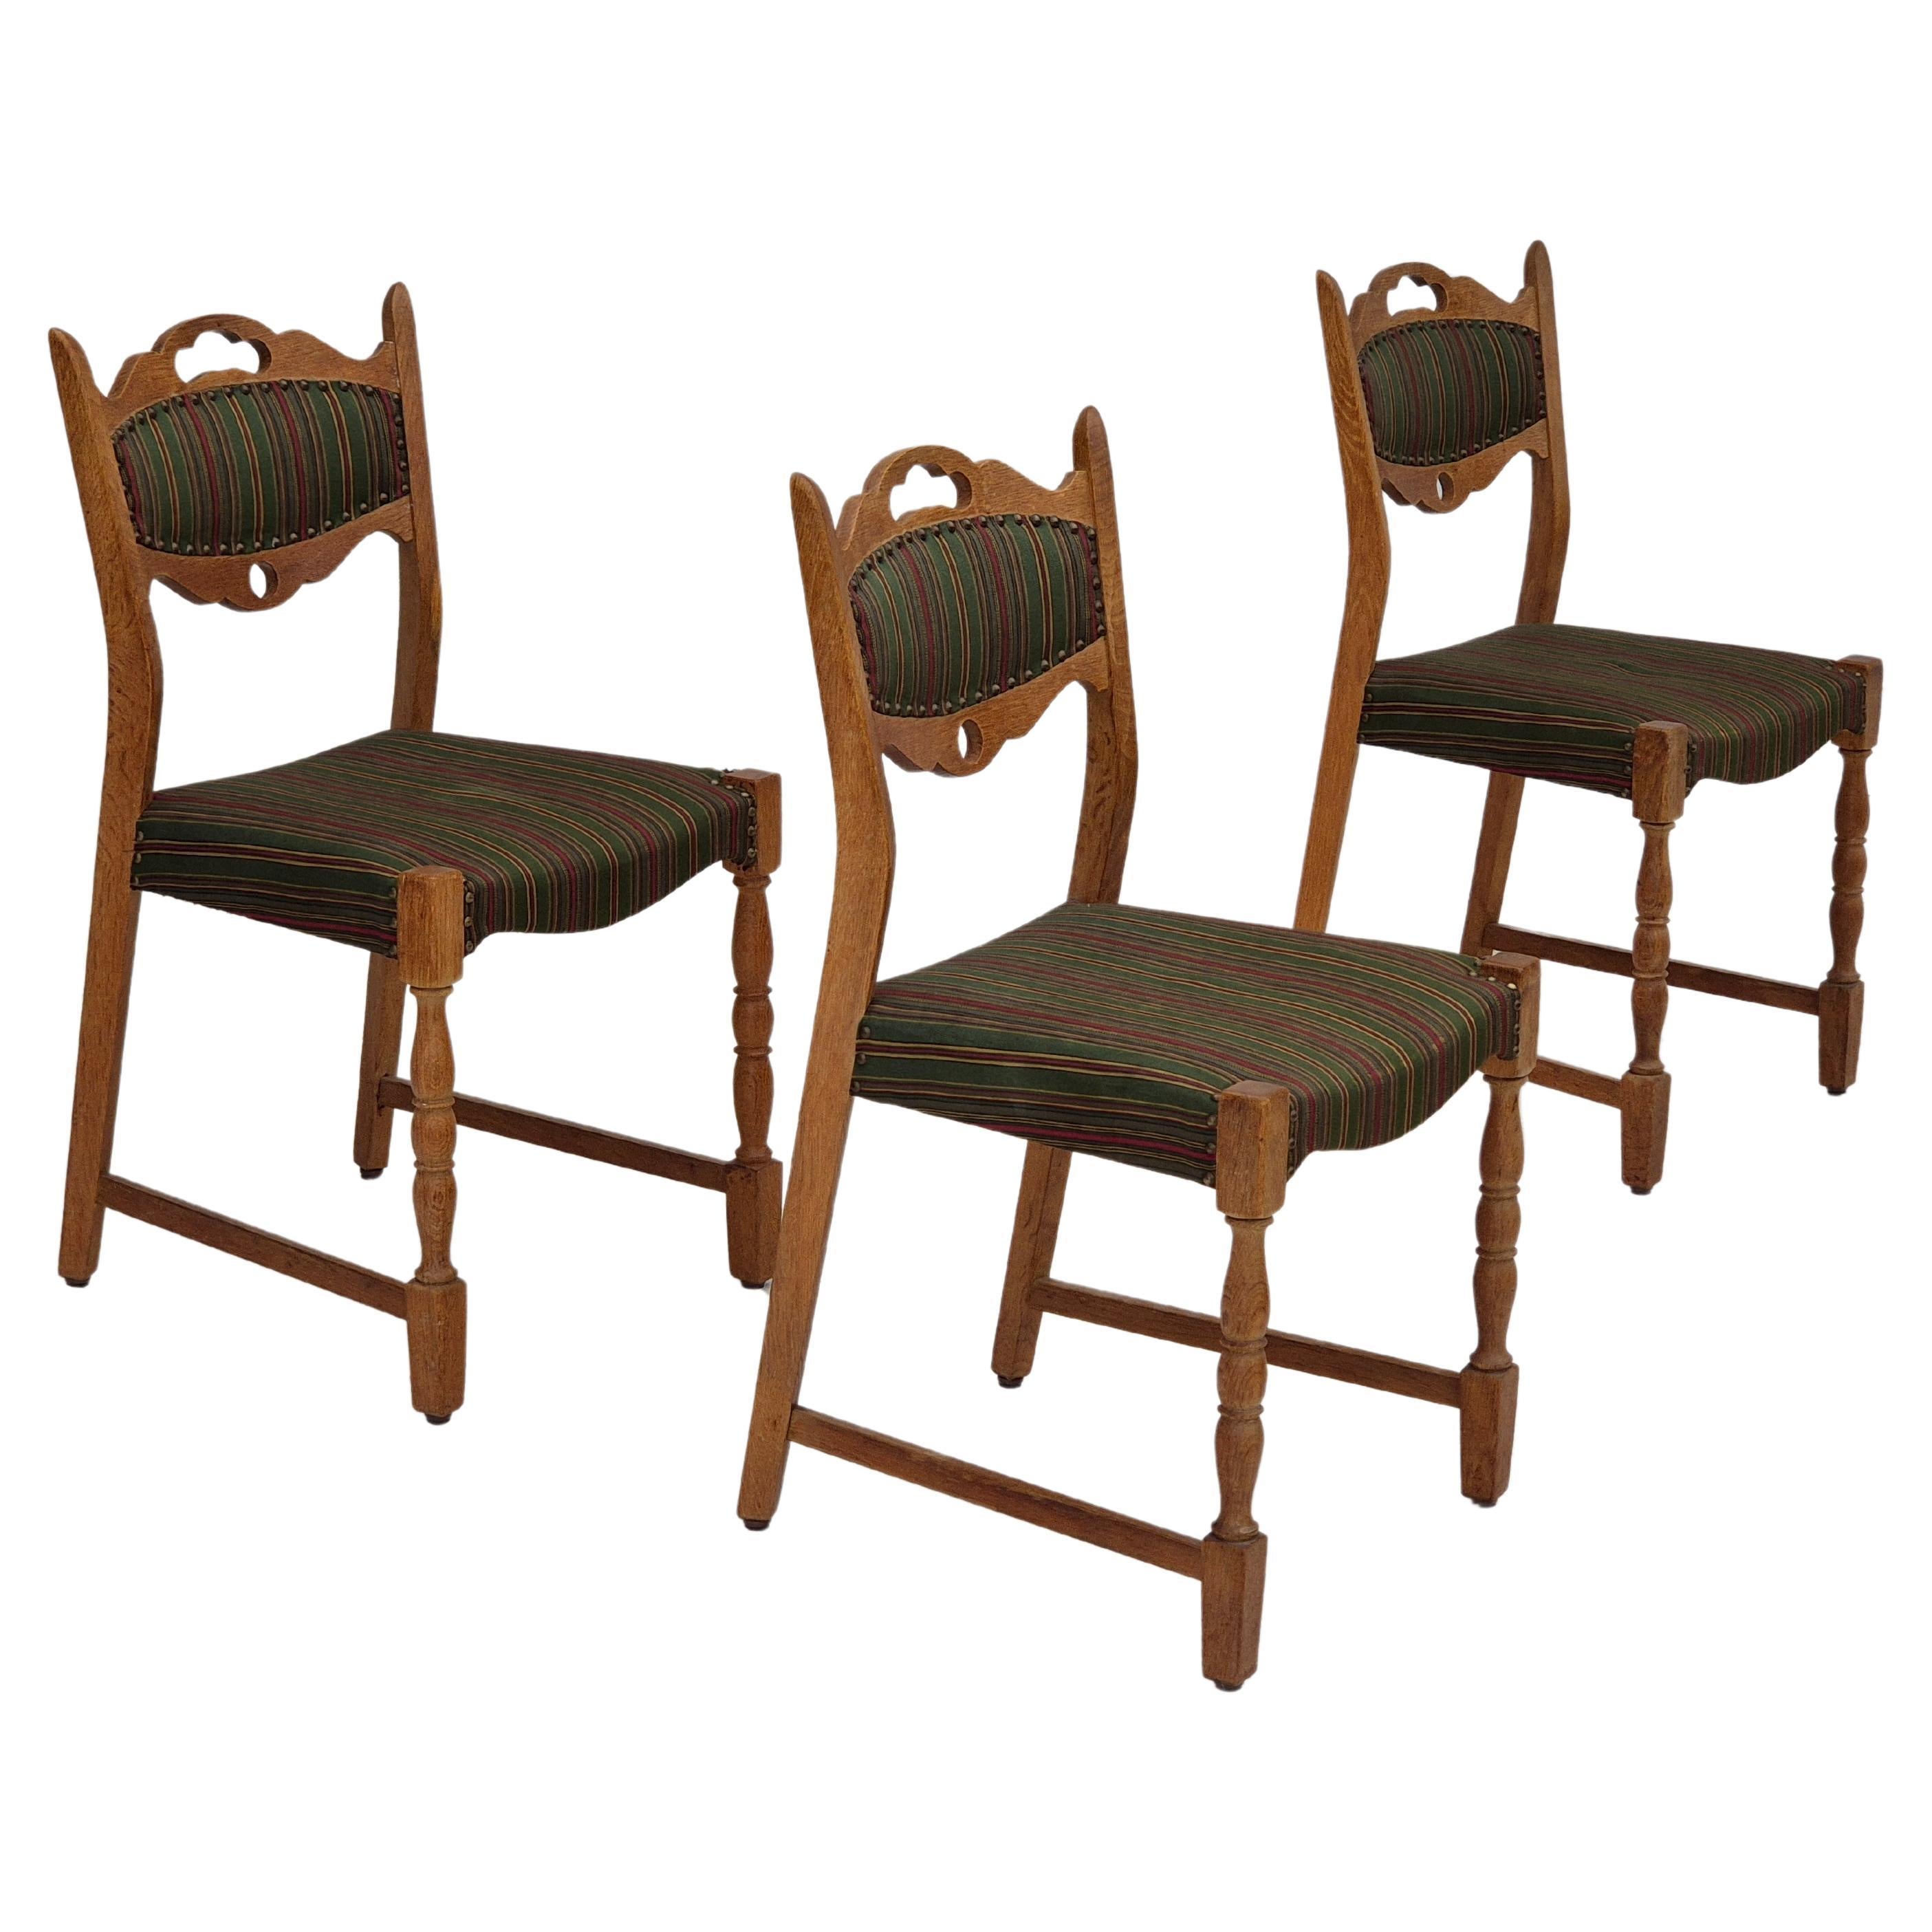 1960s, set of 3 dining Danish chairs, original condition, furniture wool, oak.